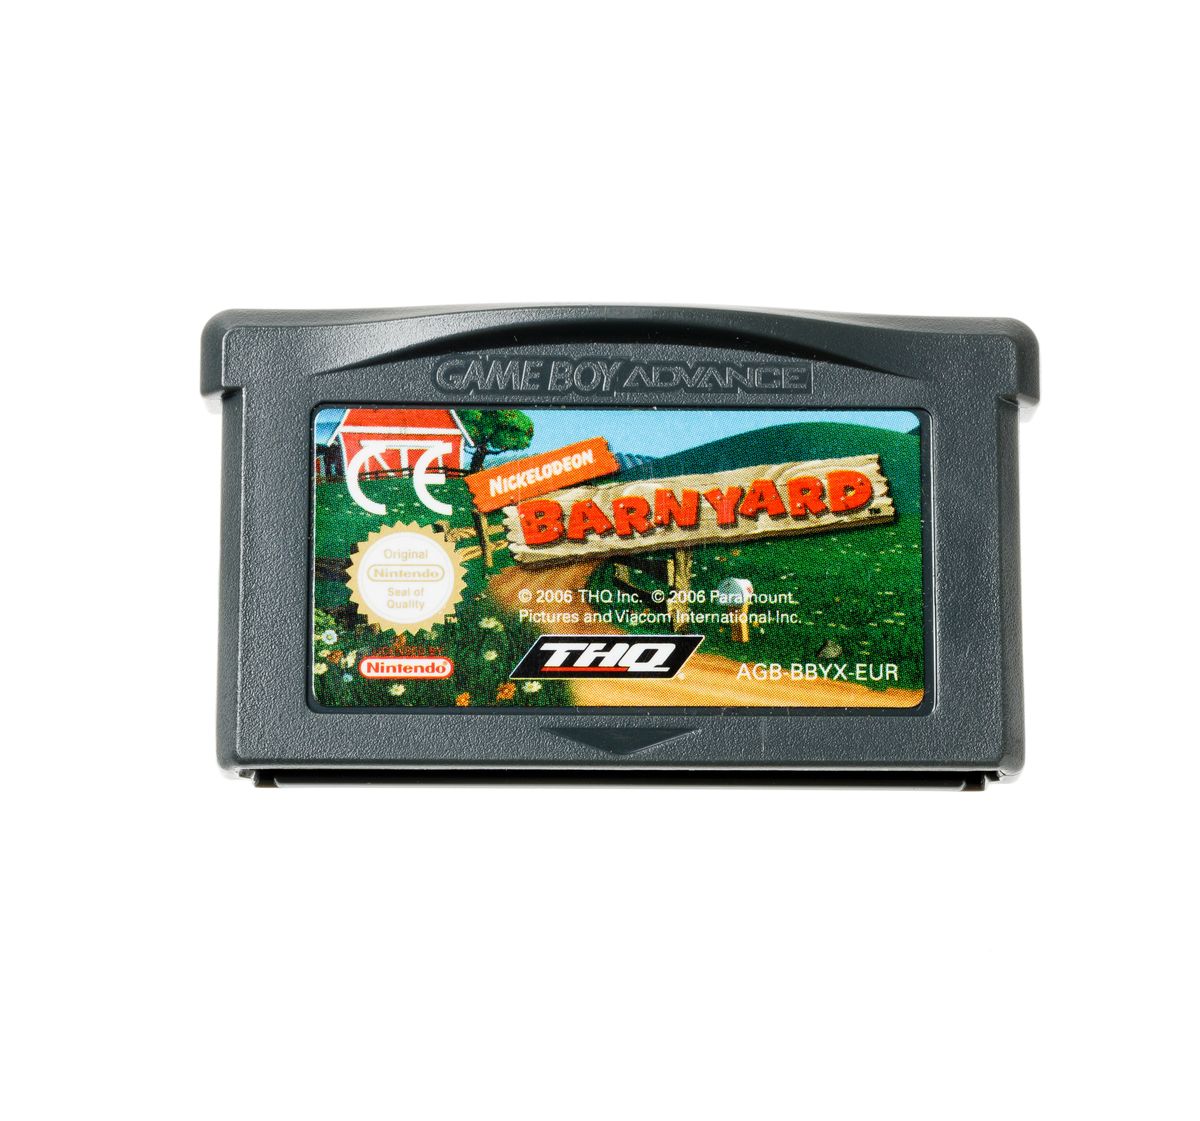 Nickelodeon Barn Yard | Gameboy Advance Games | RetroNintendoKopen.nl